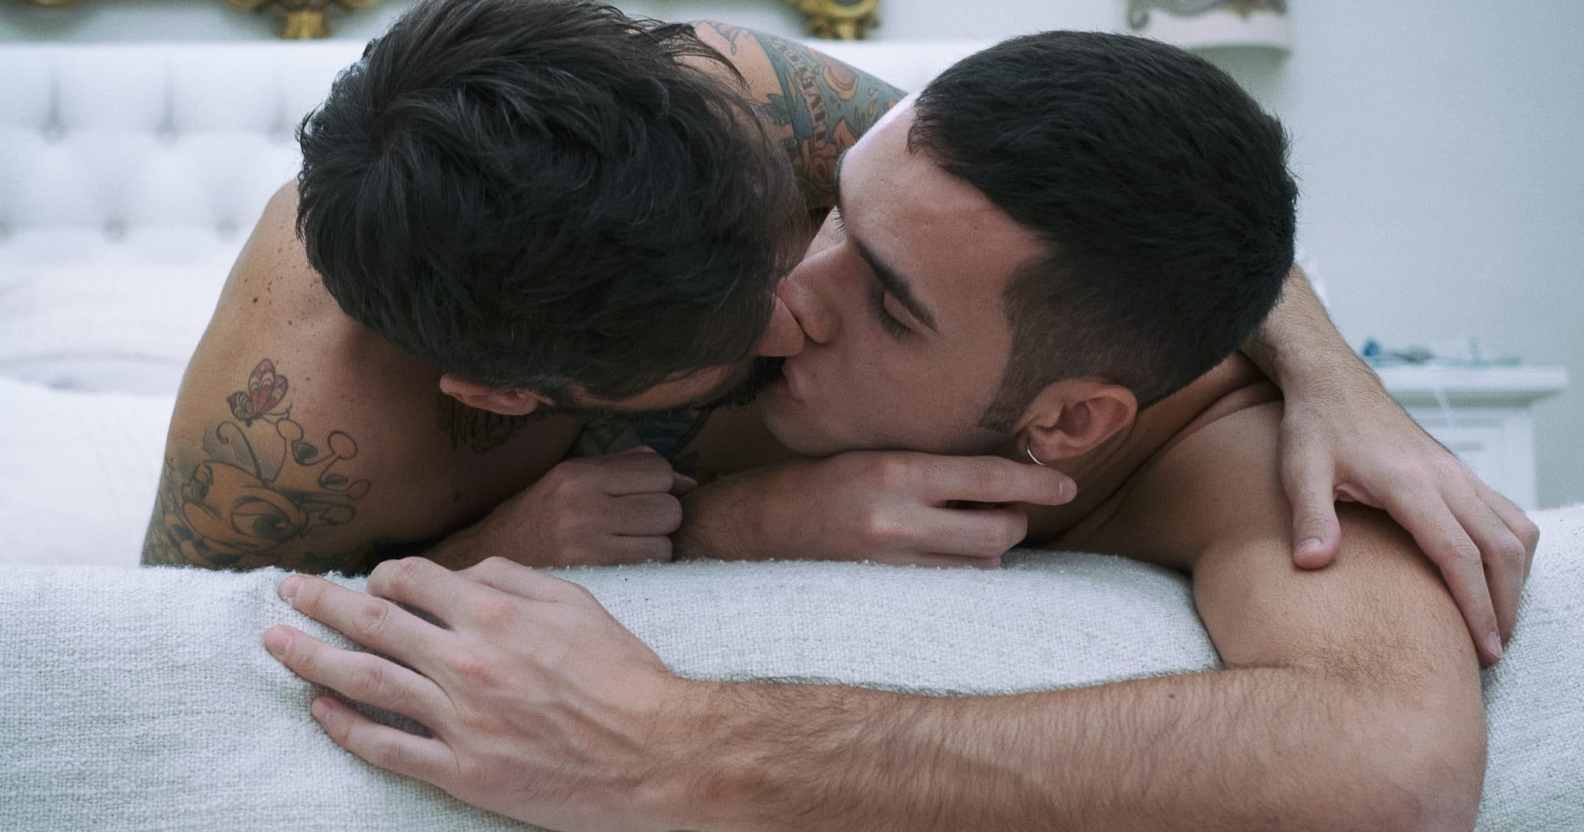 Men Lesbian Porn - Gay porn: I'm a lesbian who loves gay male porn. Here's why